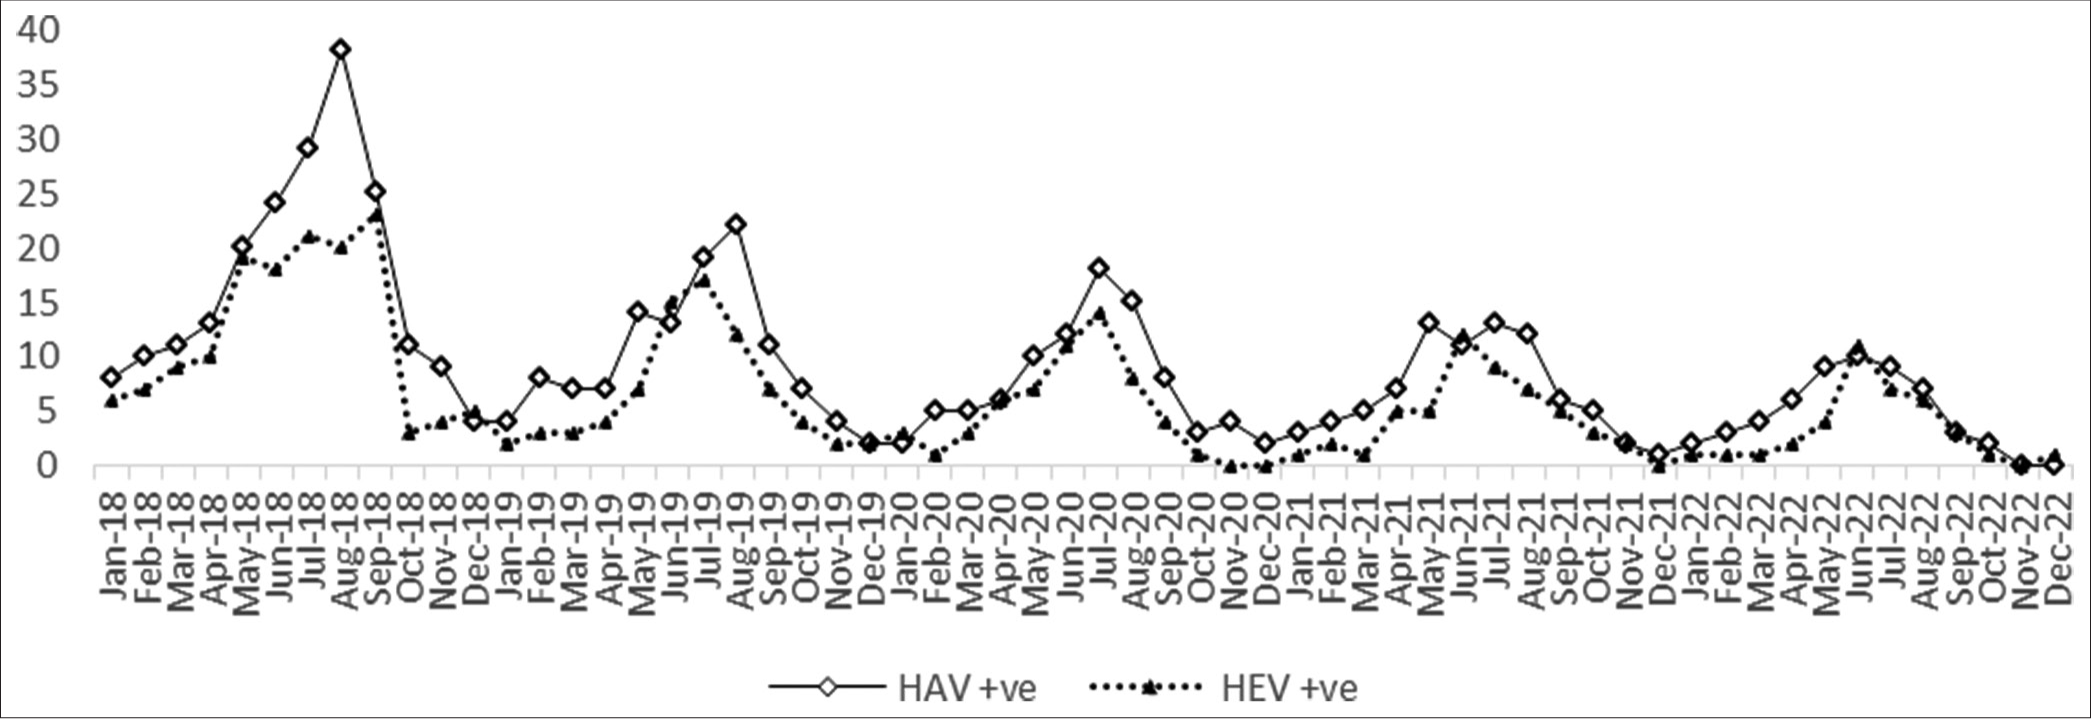 Seasonal trend of hepatitis A virus and hepatitis E virus-positive cases. HAV: Hepatitis A virus, HEV: Hepatitis E virus.